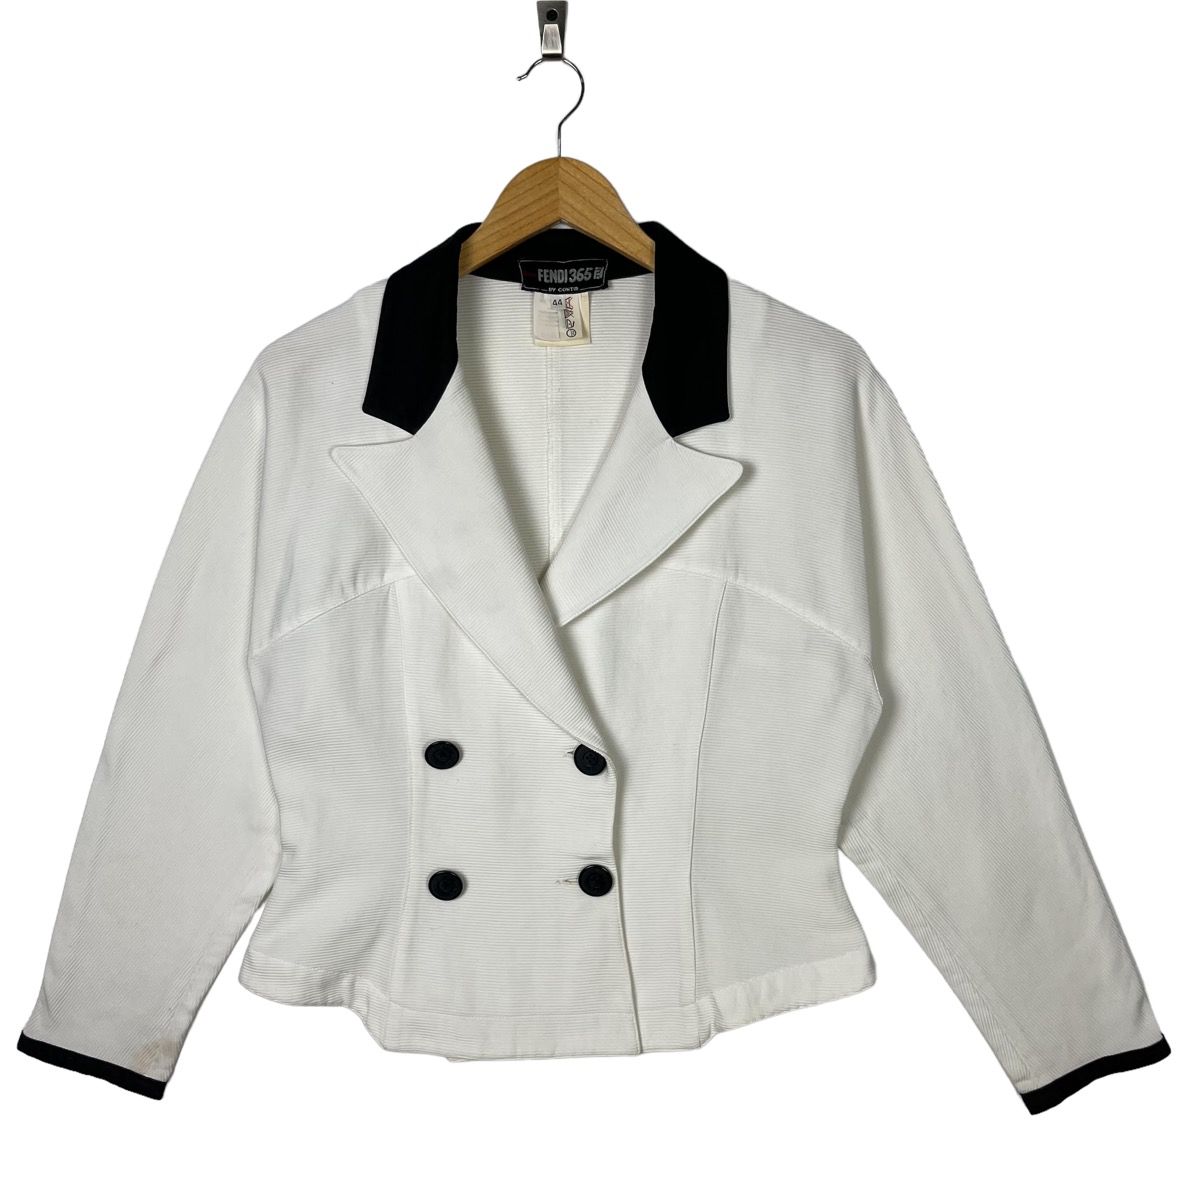 Vintage Vintage Fendi Roma 365 Blazer Jacket Size M / US 6-8 / IT 42-44 - 1 Preview